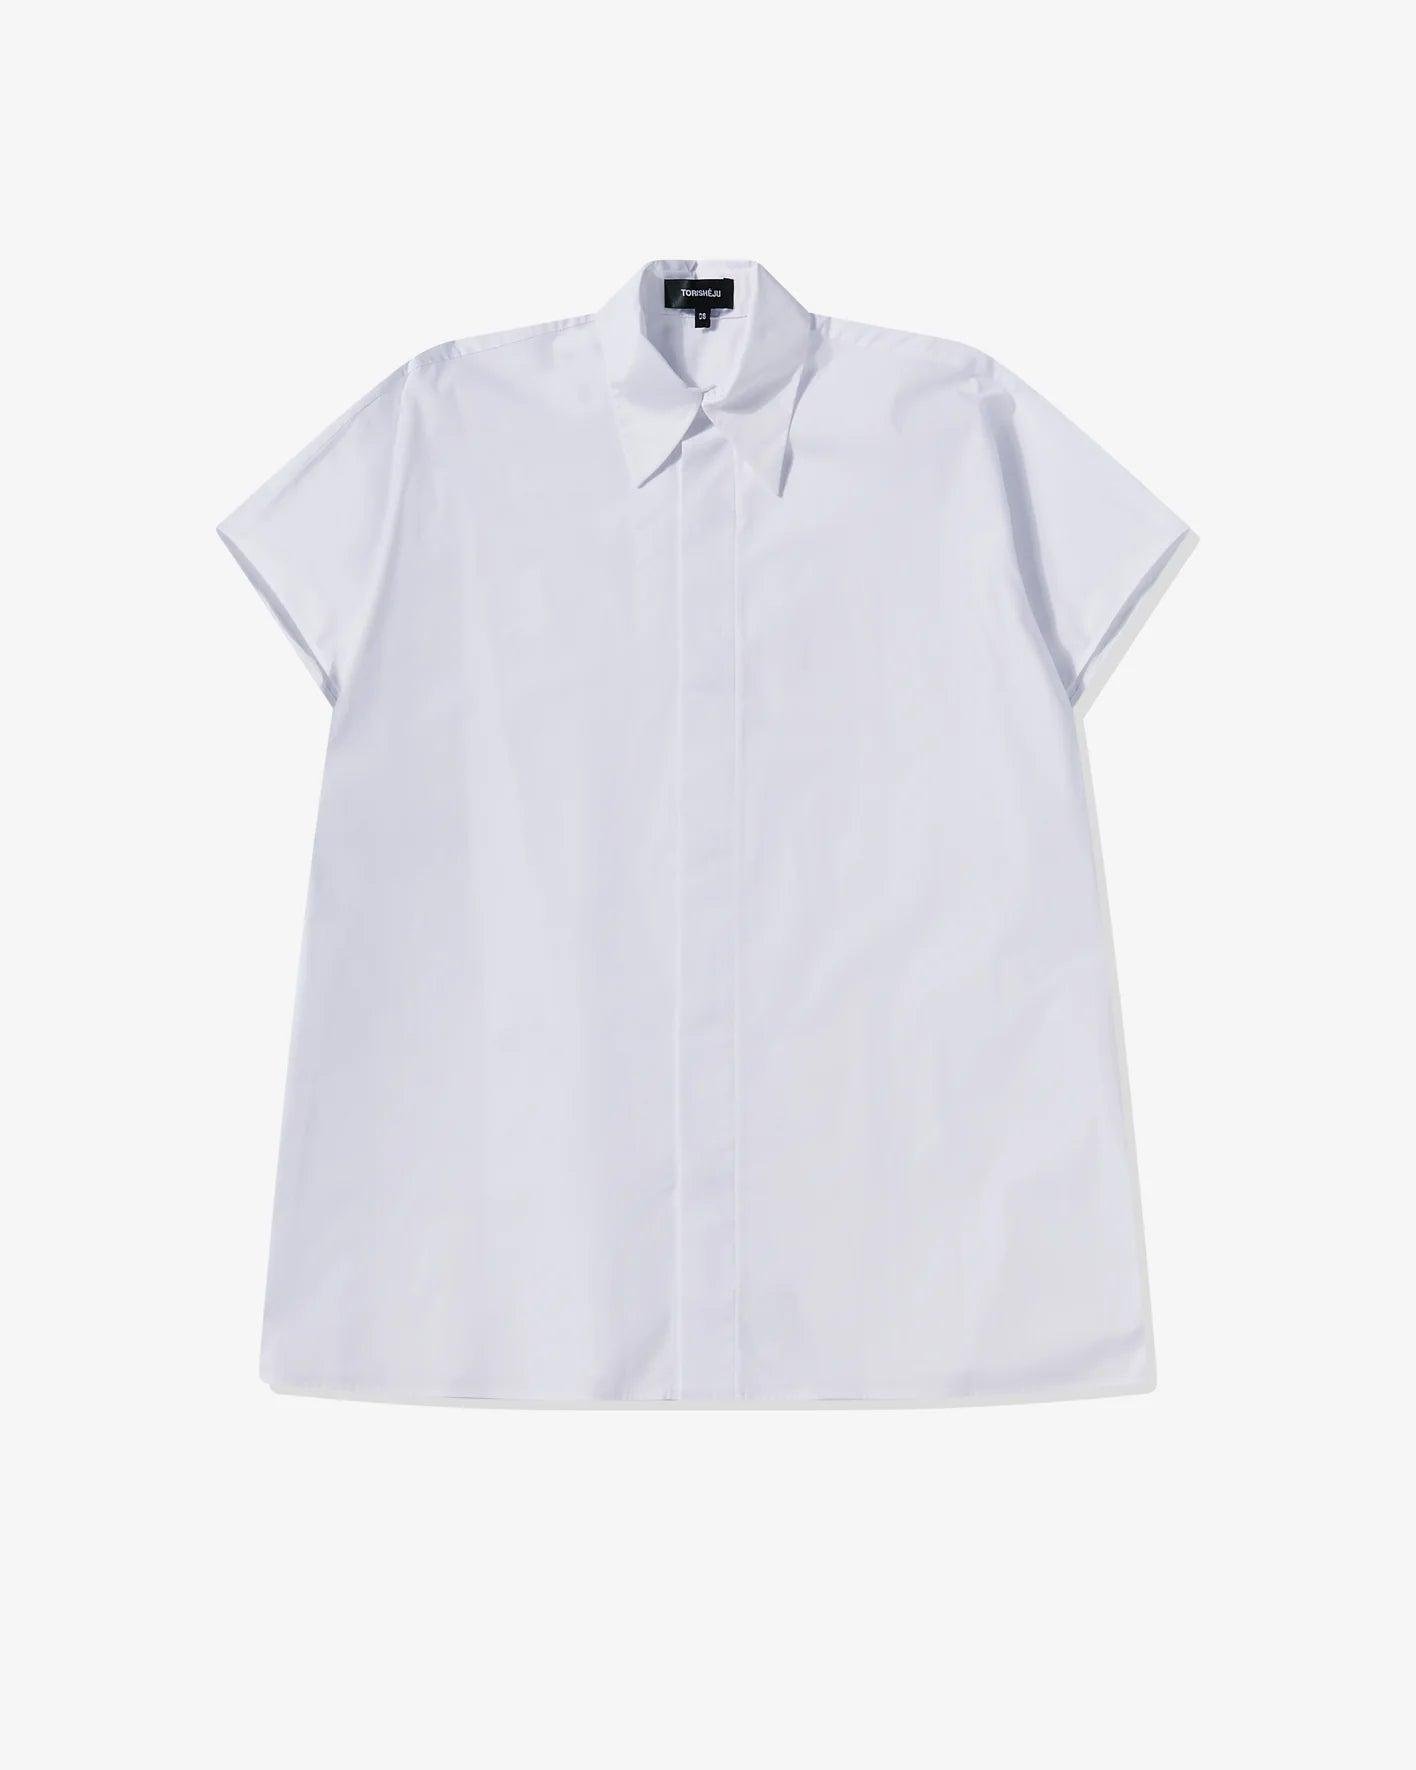 Torisheju - Women's Square Short Sleeve Shirt - (White) by TORISHEJU